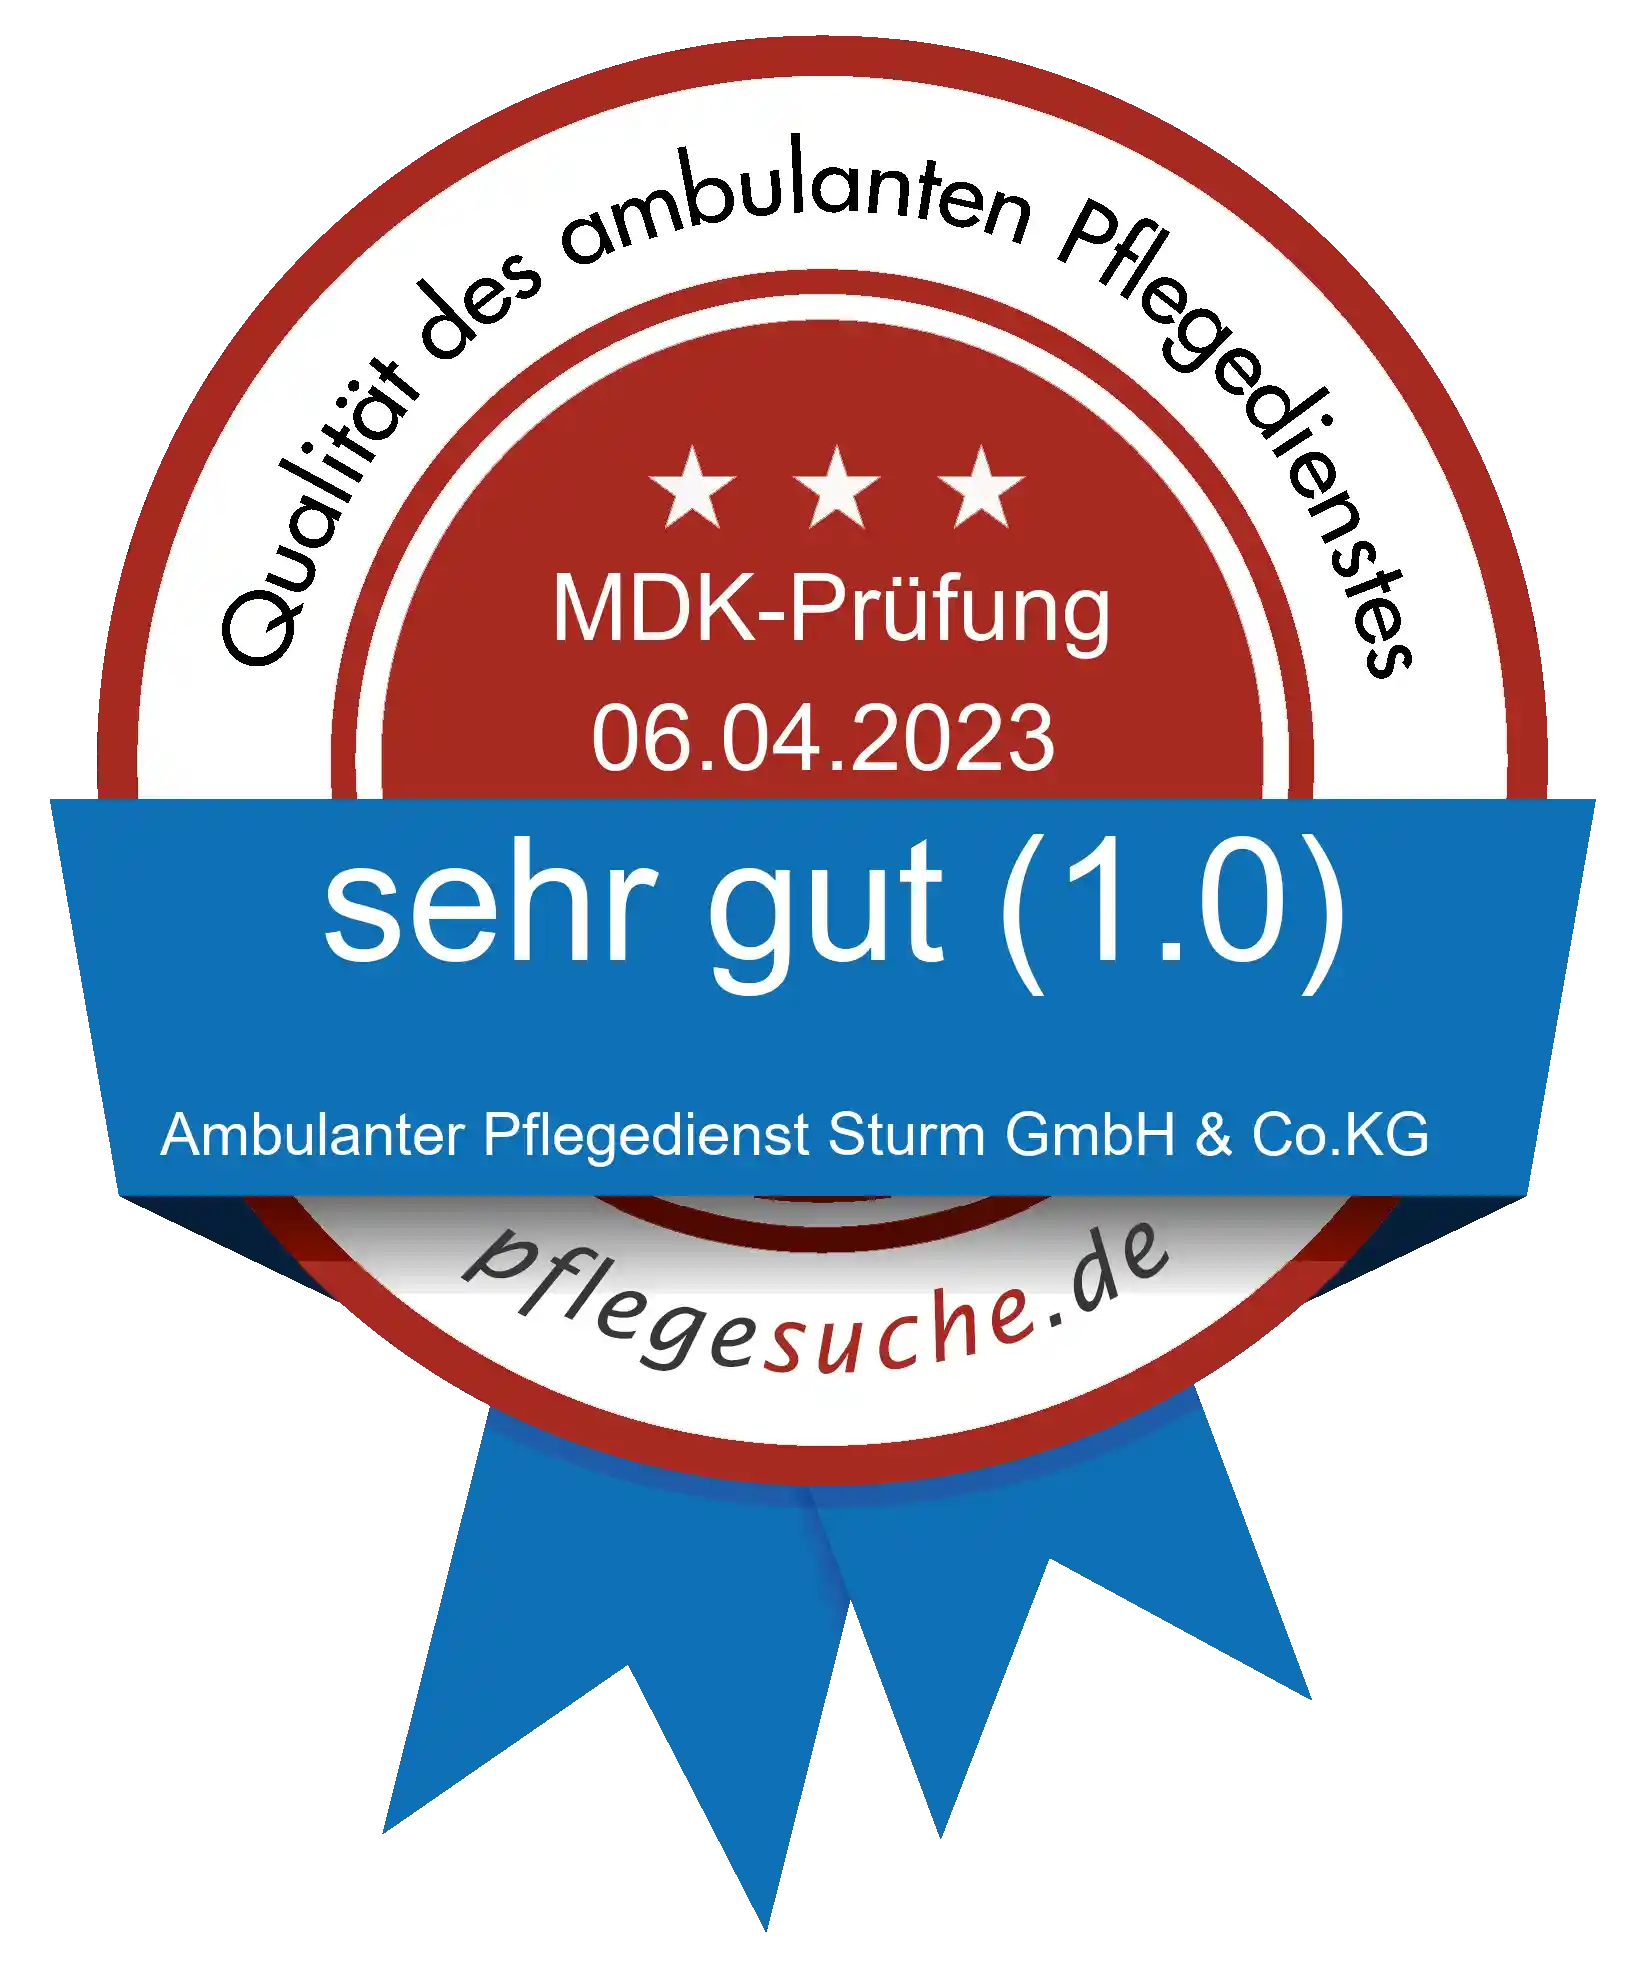 Siegel Benotung: Ambulanter Pflegedienst Sturm GmbH & Co.KG